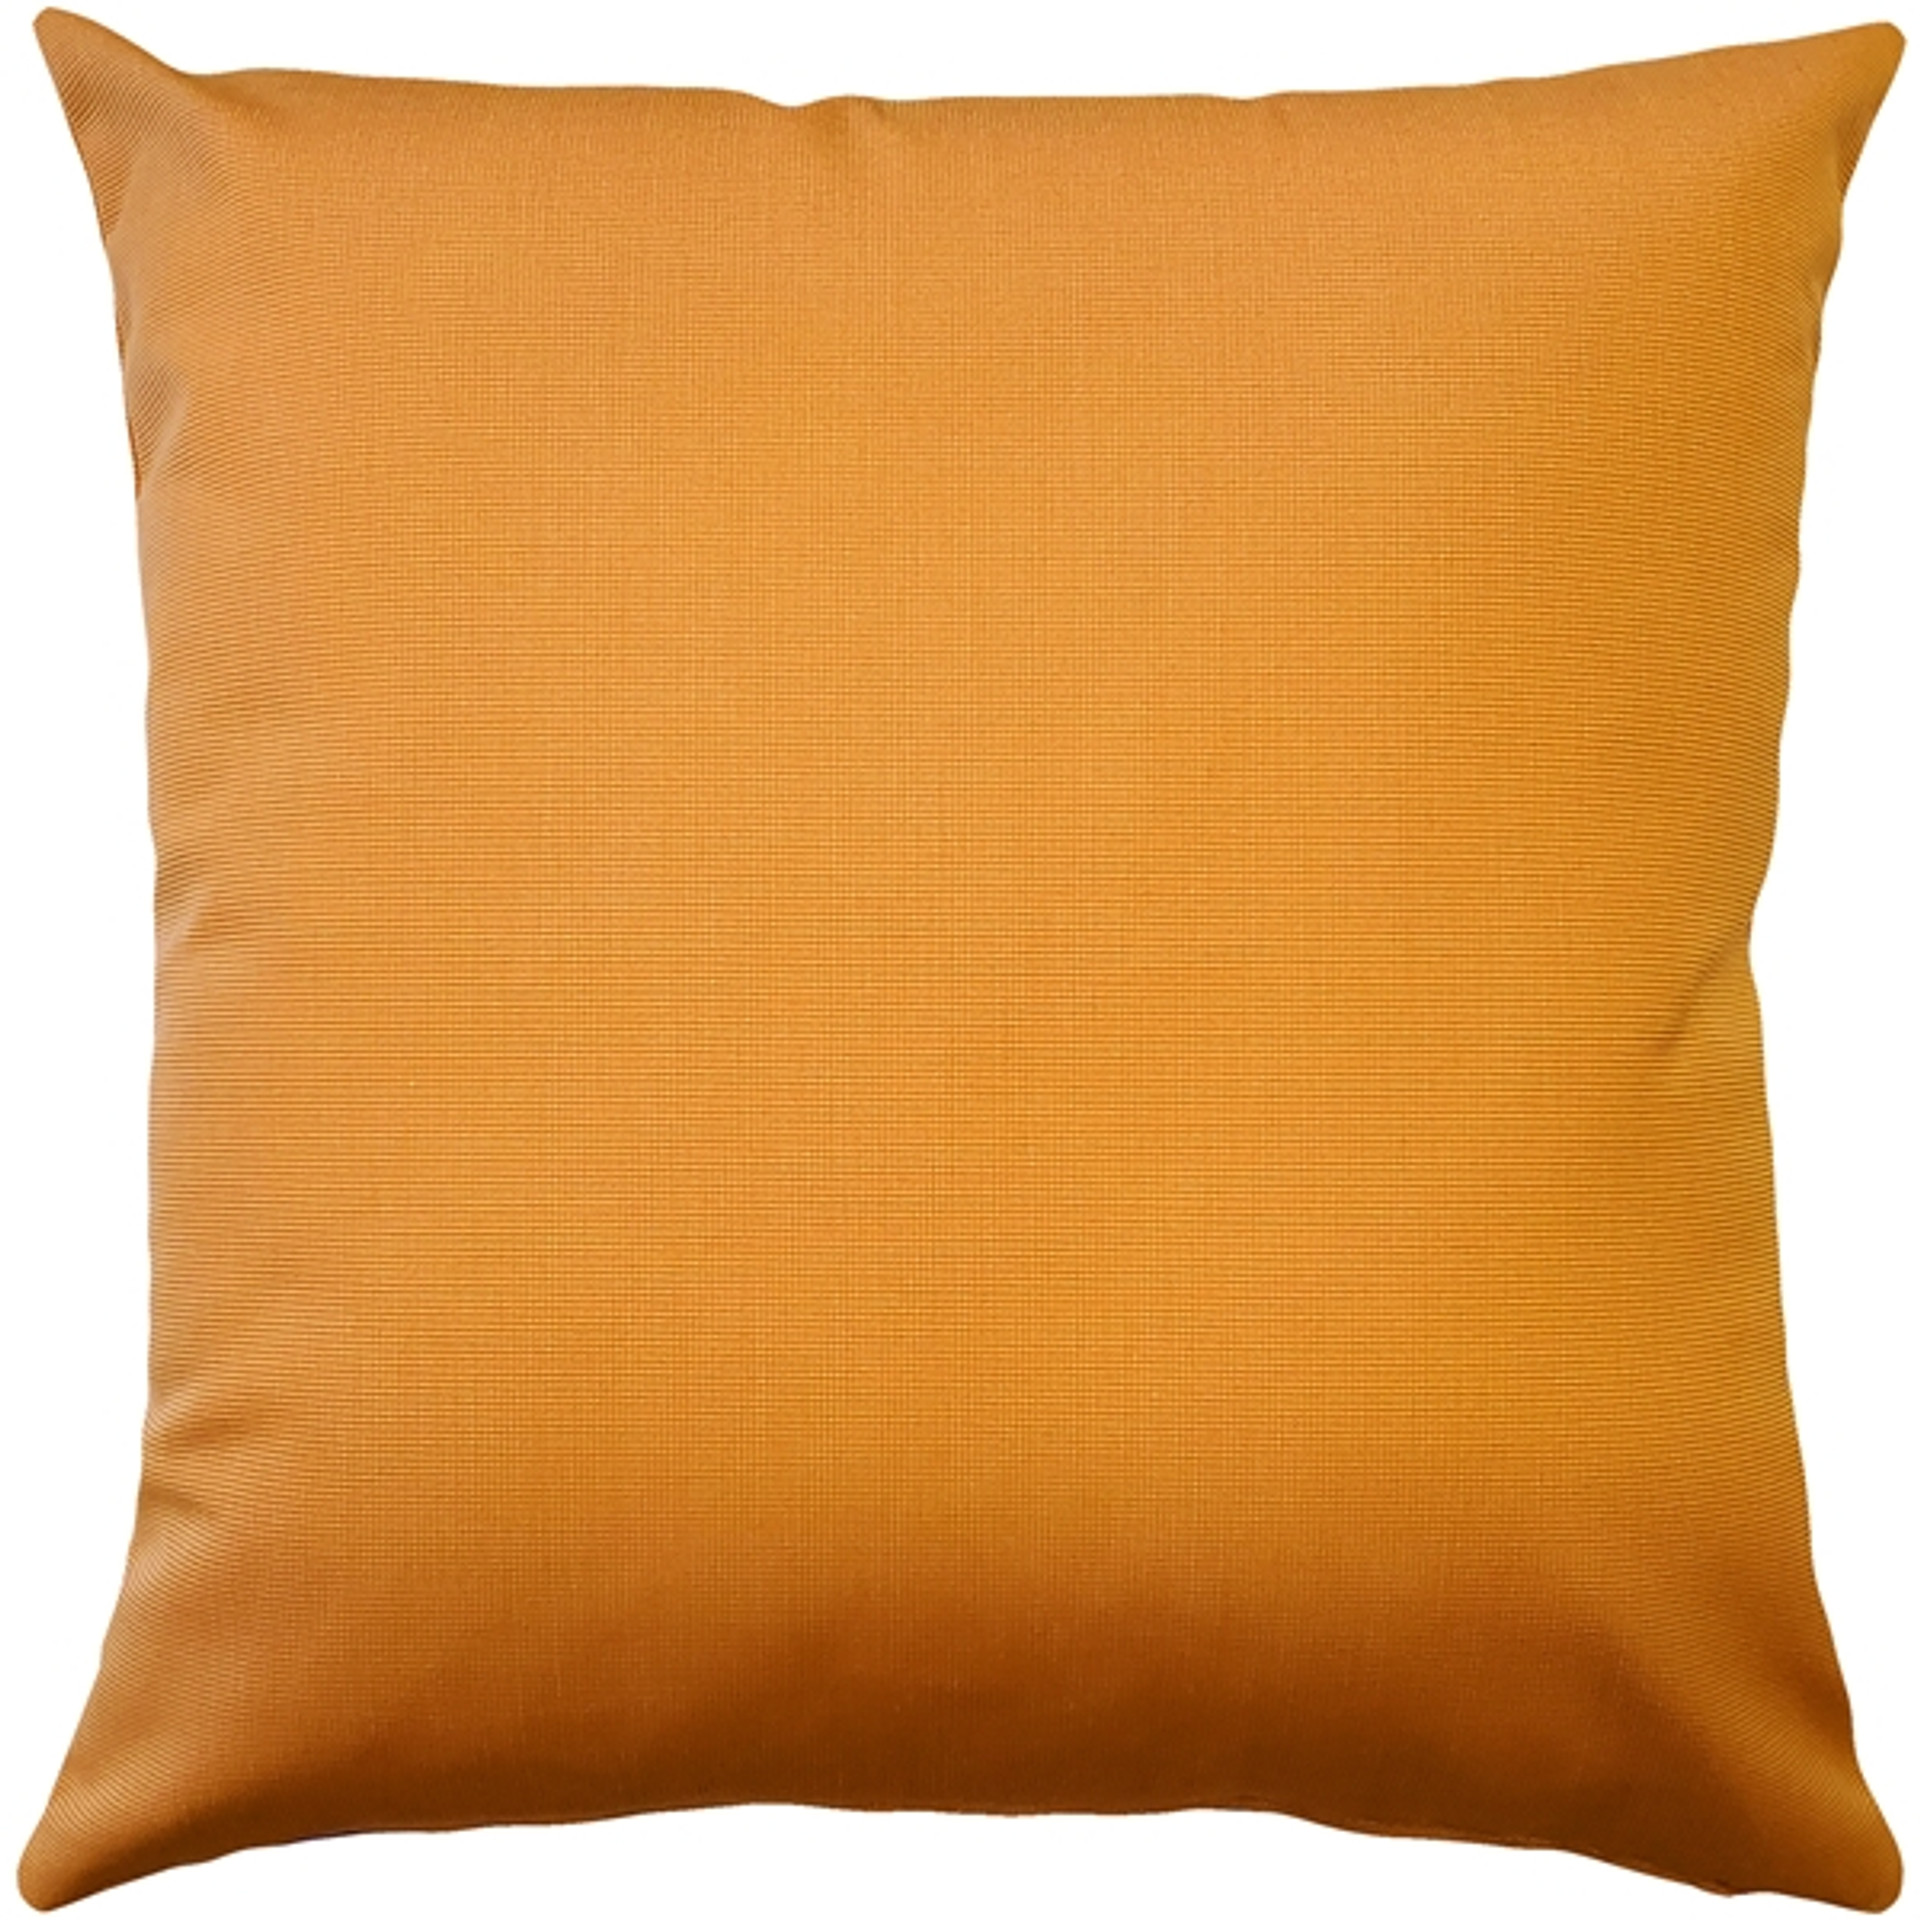 Sunbrella Tangelo Orange 20x20 Outdoor Pillow from Pillow Decor